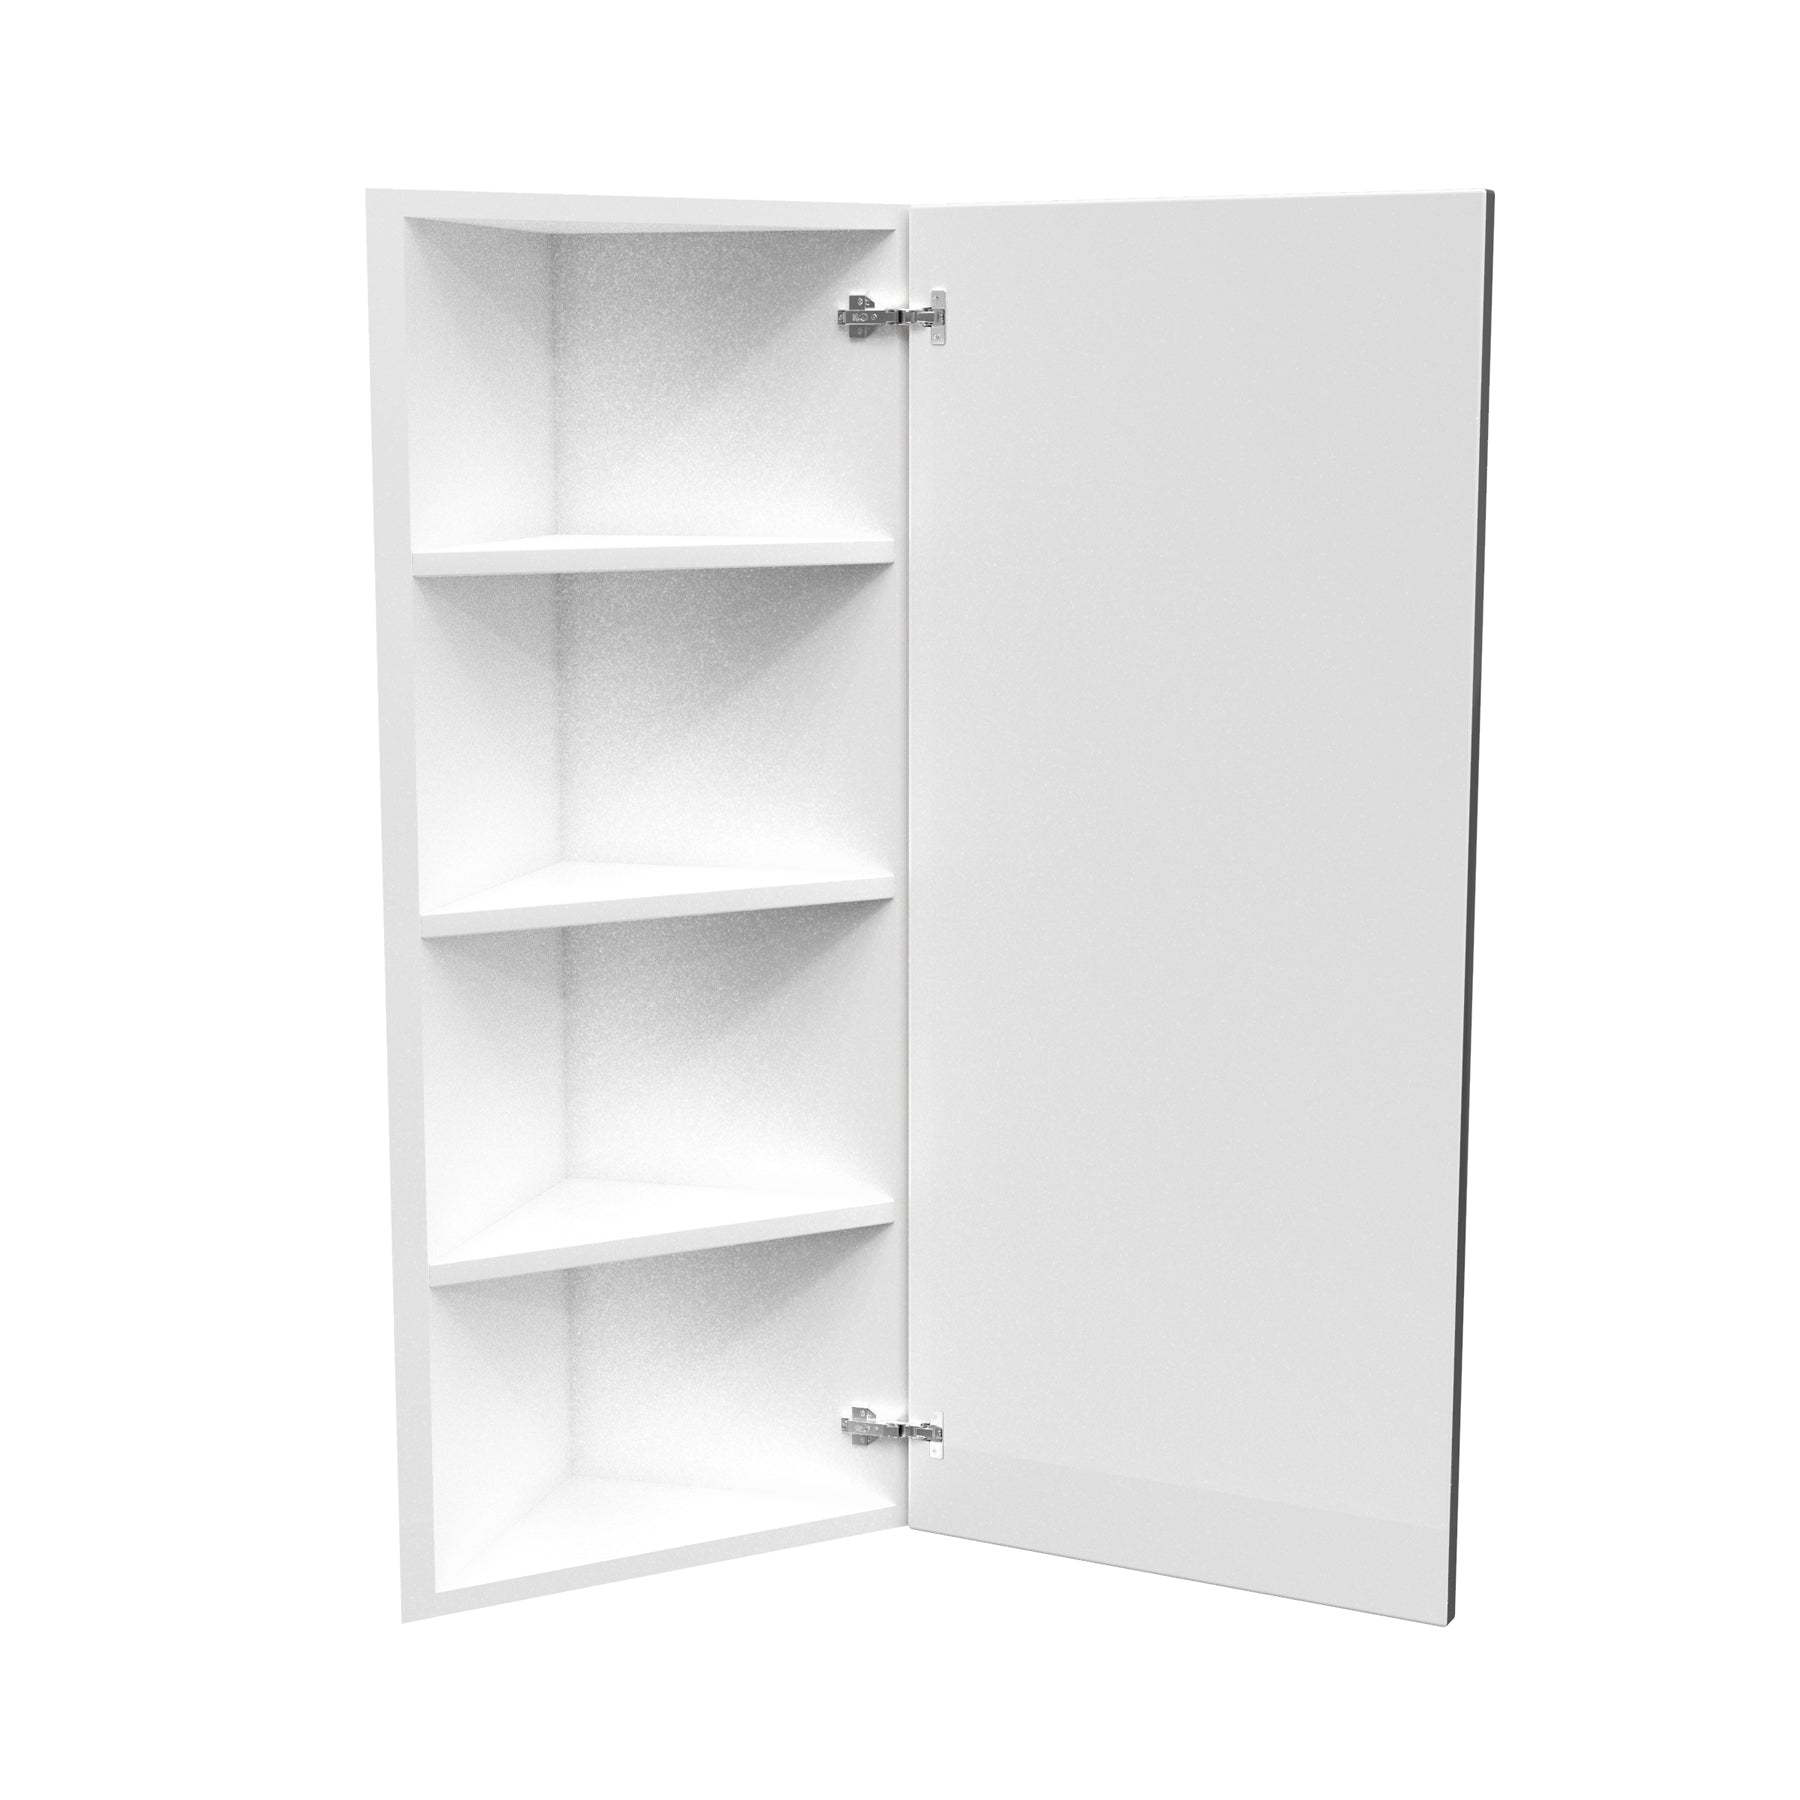 Single Door Wall End Cabinet | Milano Slate | 12W x 42H x 12D